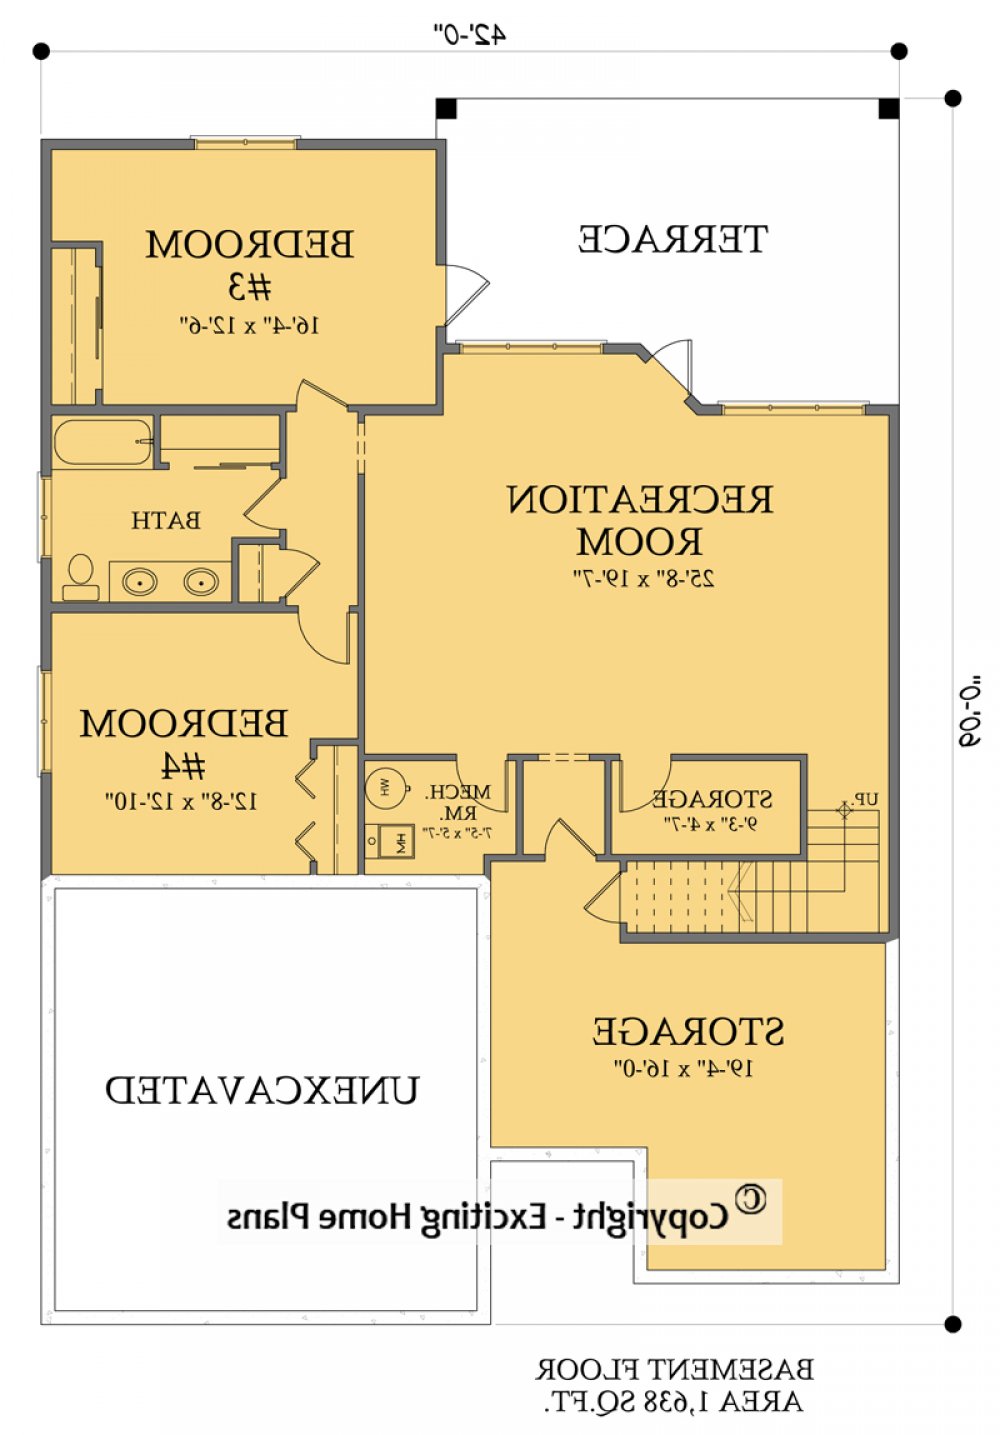 House Plan E1600-10M Lower Floor Plan REVERSE